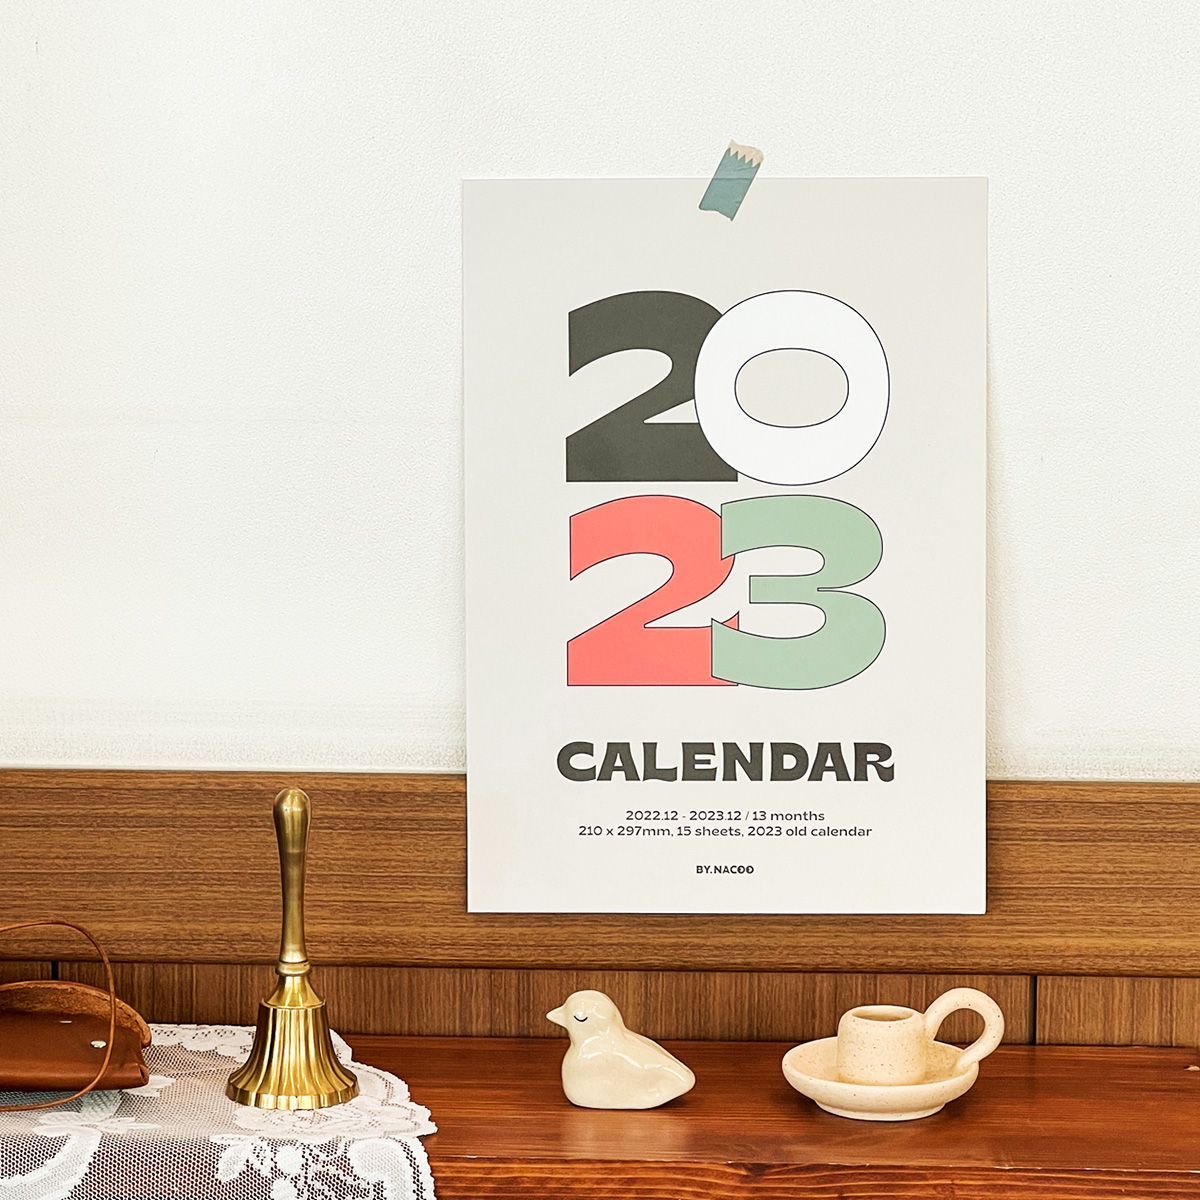 2023 Old Calendar - Wall